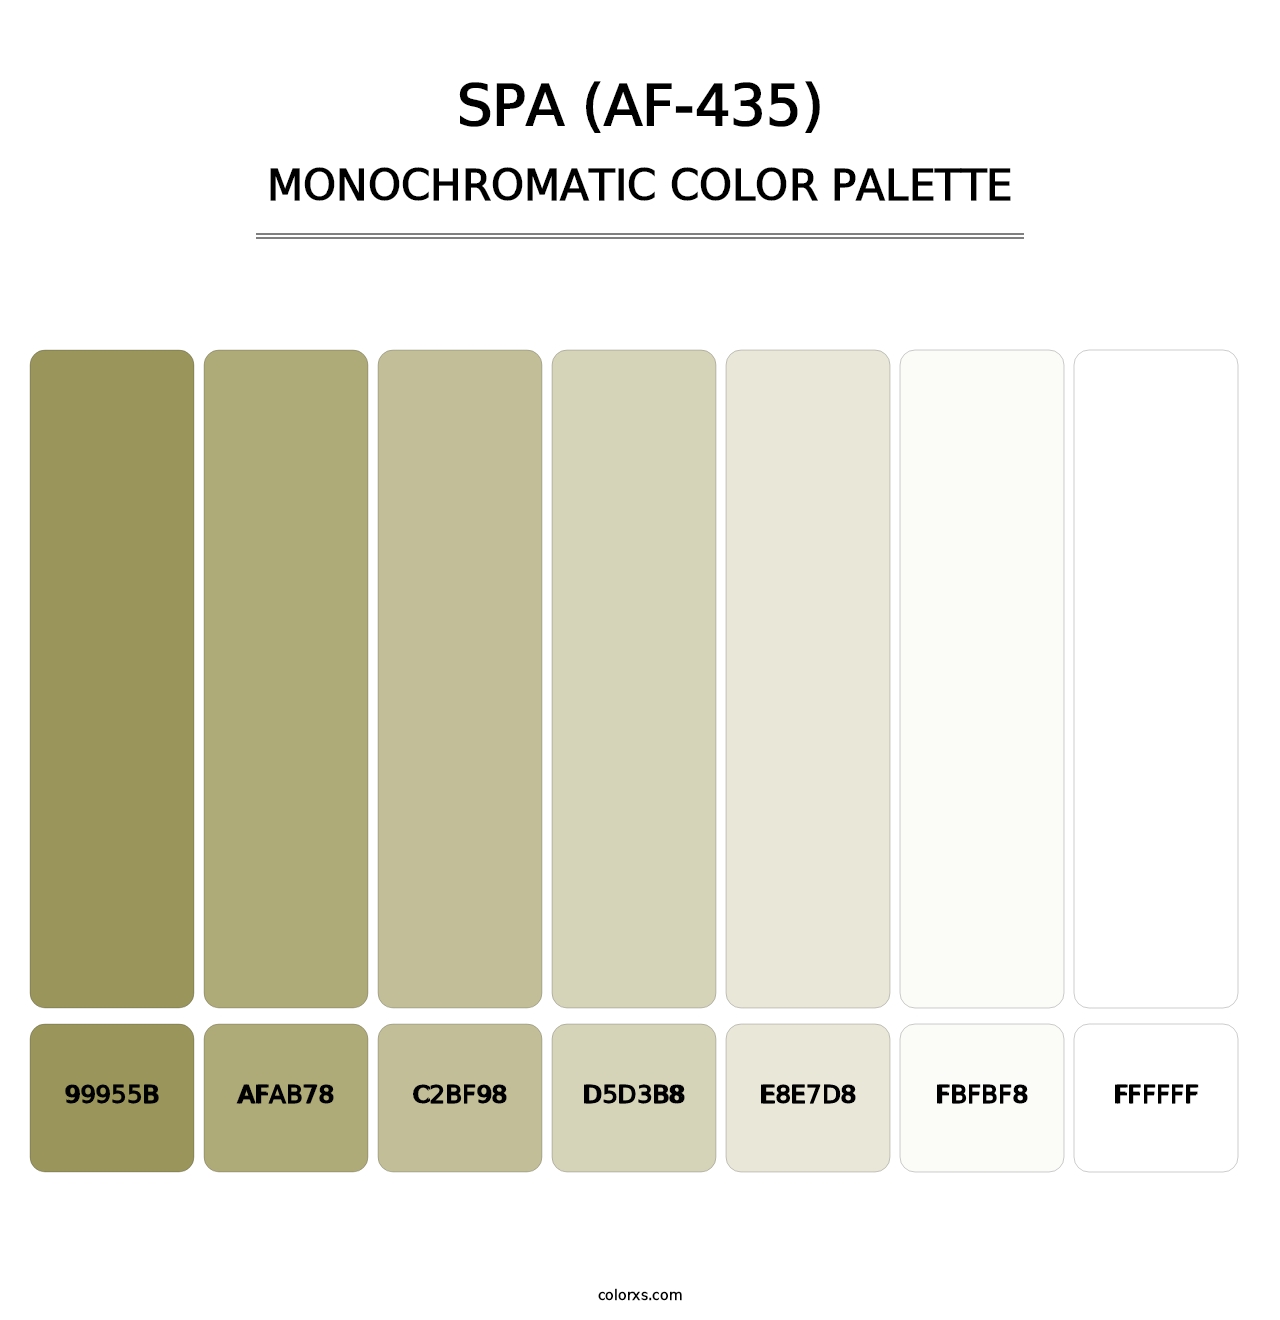 Spa (AF-435) - Monochromatic Color Palette